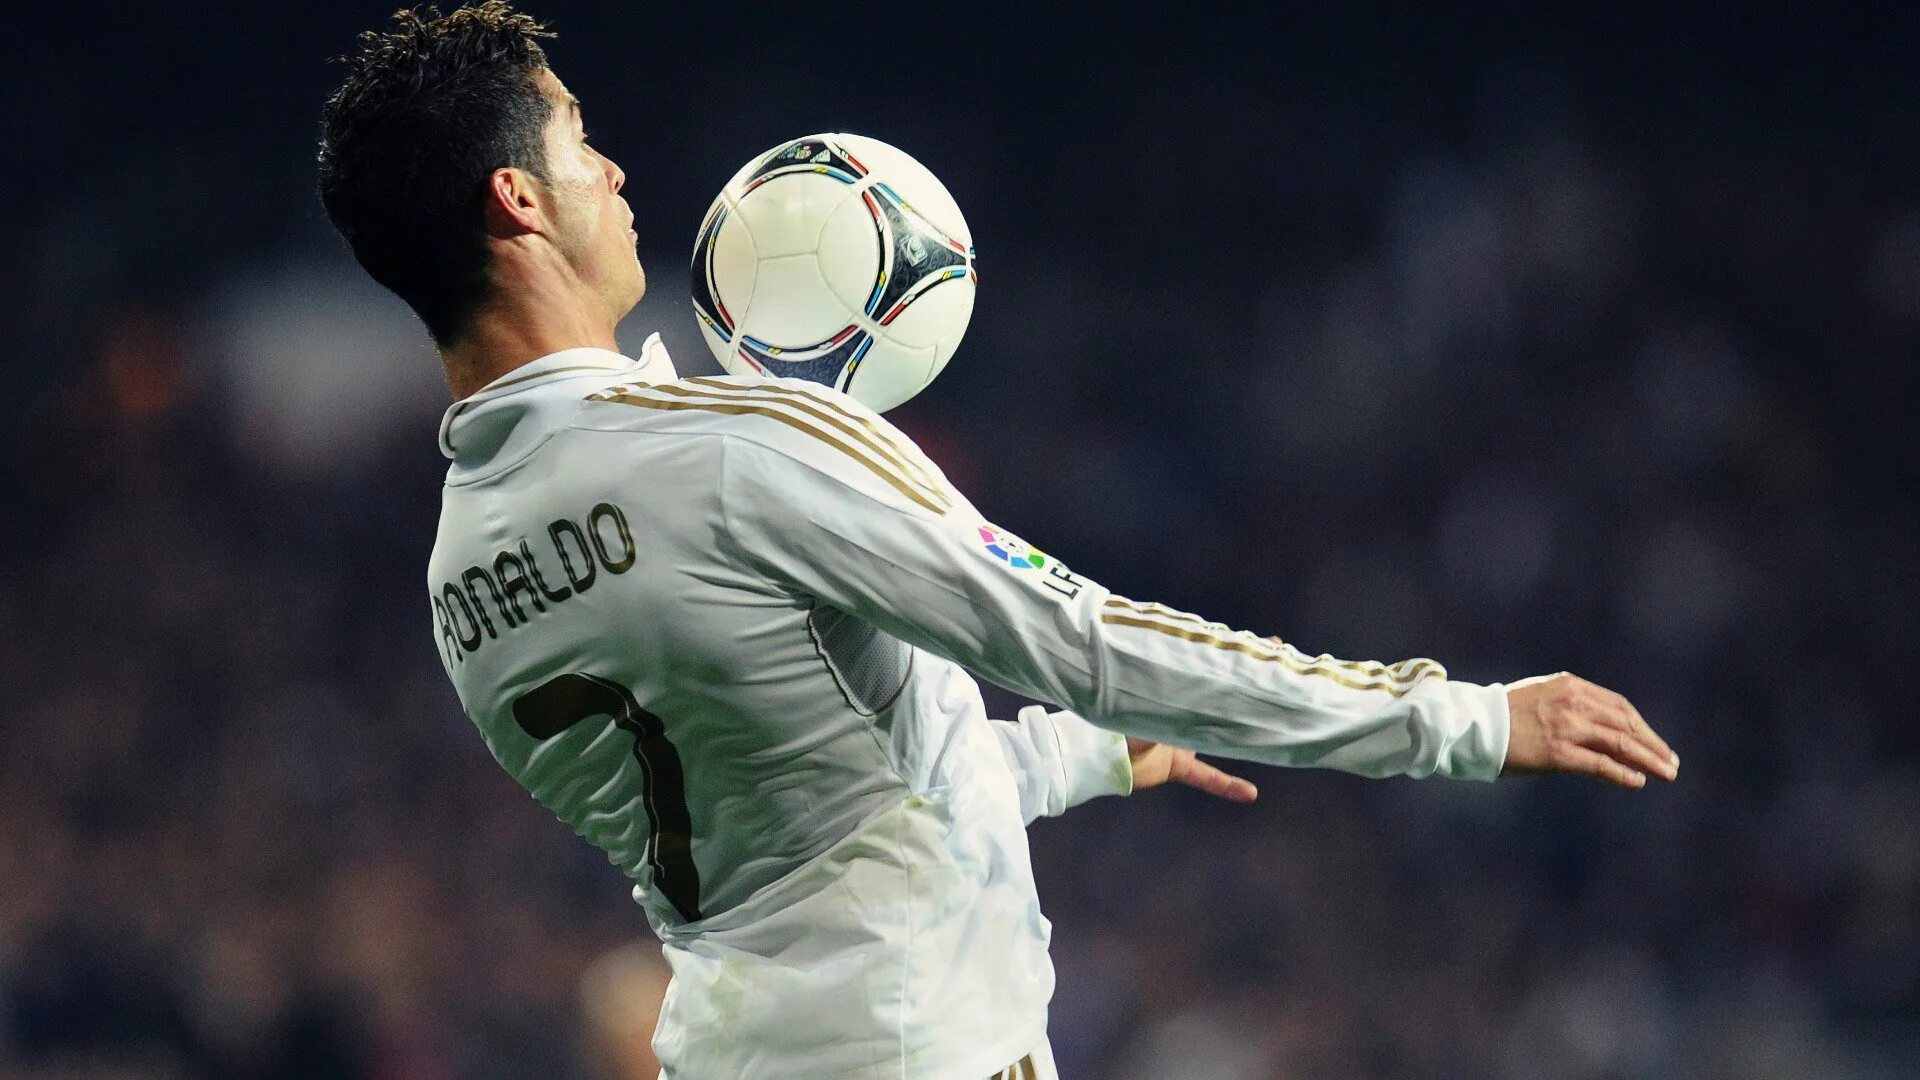 Криштиану Роналду. Картинки Криштиану Роналду. Cr7 Cristiano Ronaldo. Криштиану Роналду 2012. Ава роналдо